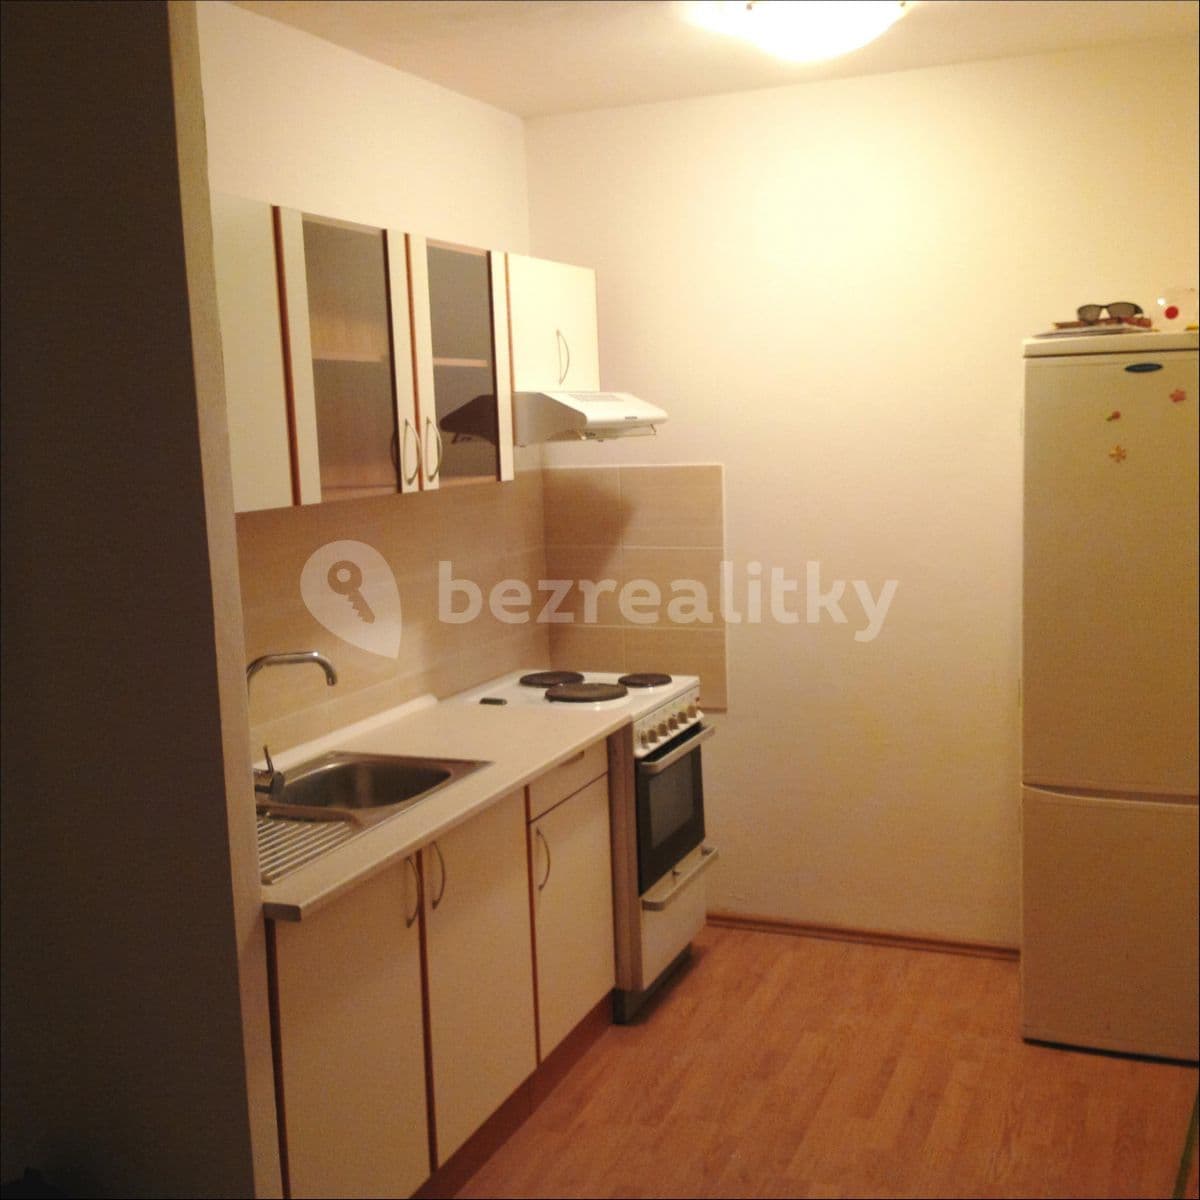 1 bedroom with open-plan kitchen flat to rent, 44 m², Prague, Prague